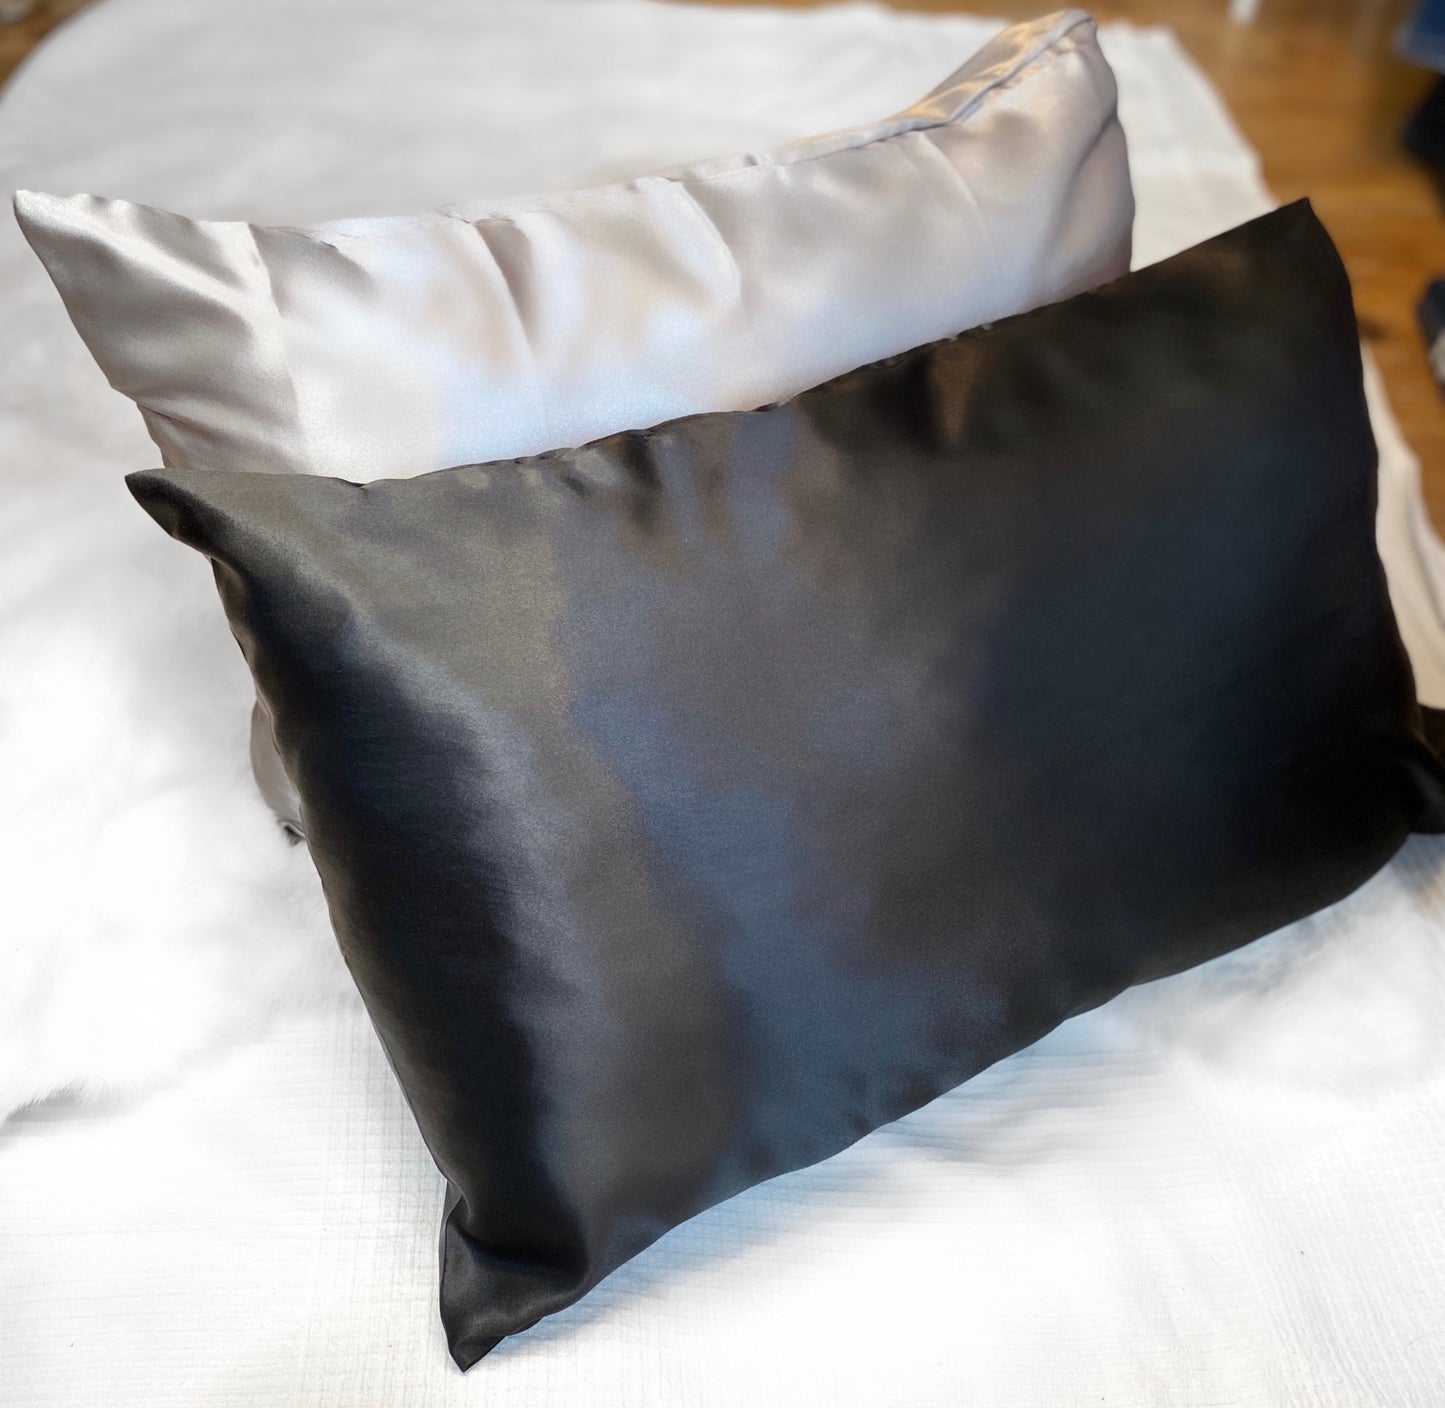 Satin Pillowcase Set 40x80cm